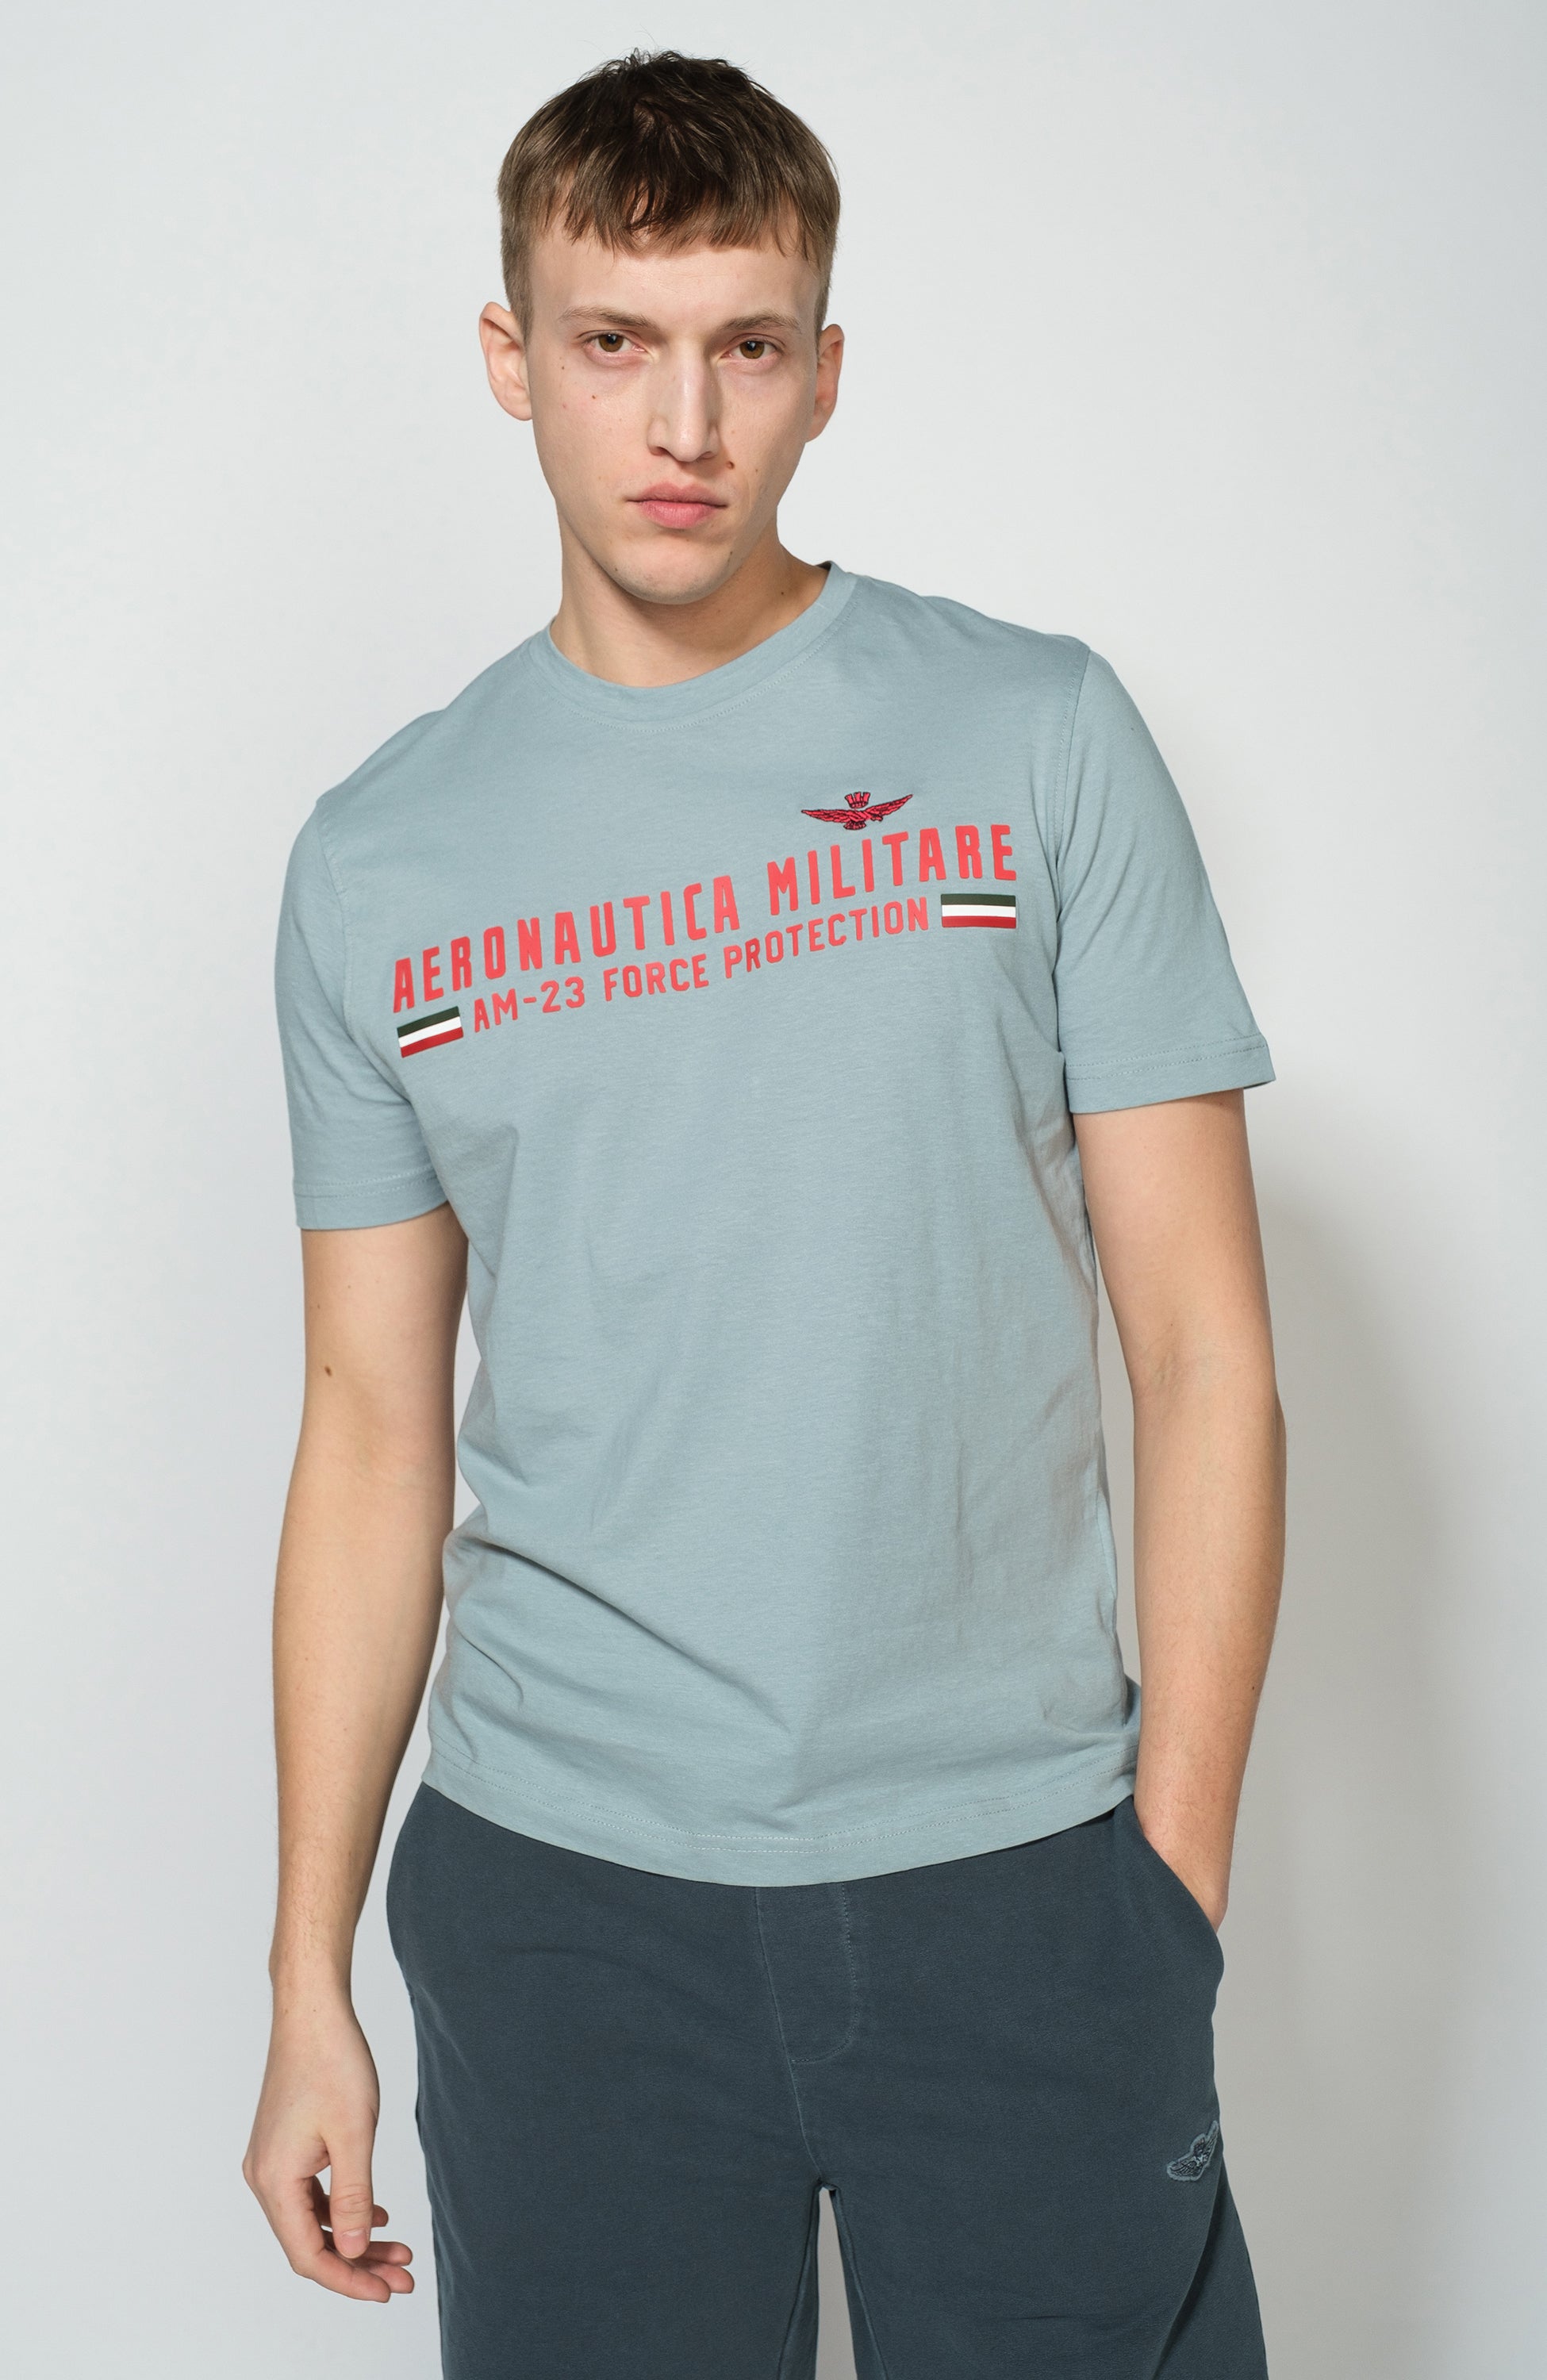 Trendy and Organic aeronautica militare shirt for All Seasons 